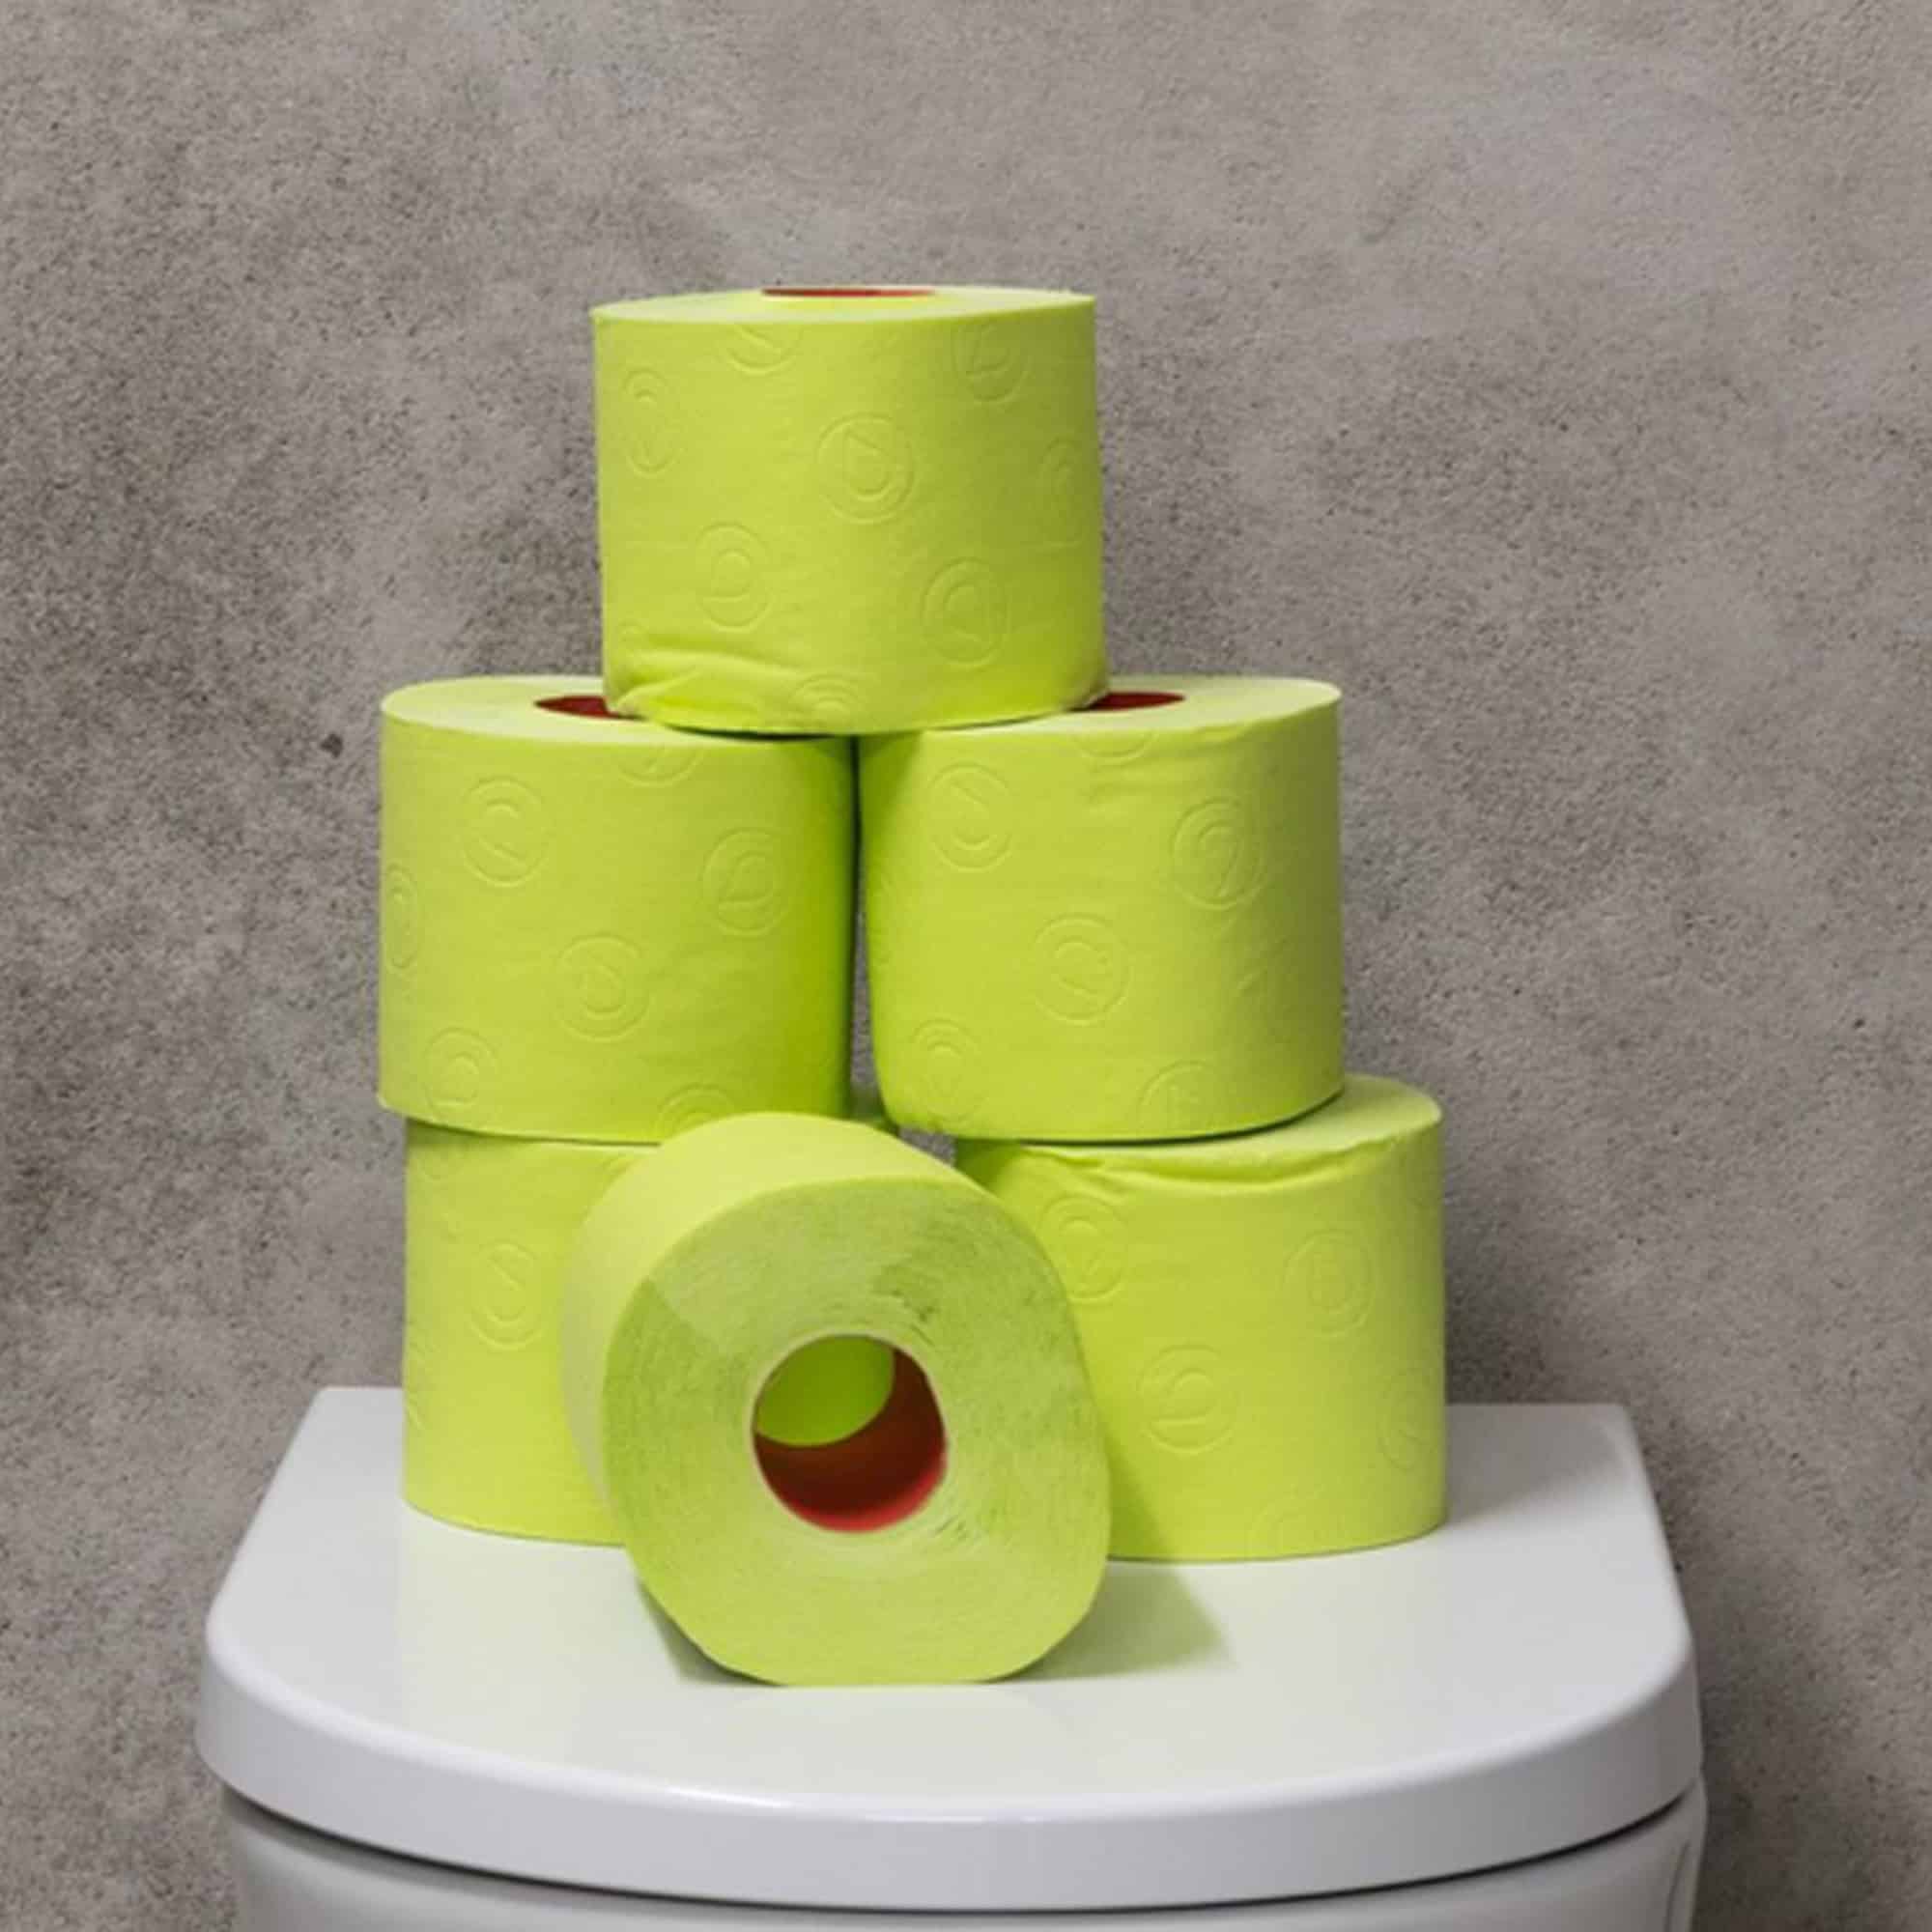 RF200073773-Lime-Green-Toilet-Paper-3-Ply-6-Jumbo-Rolls-Pack-180-High-Quality-Sheets-5-1.jpg